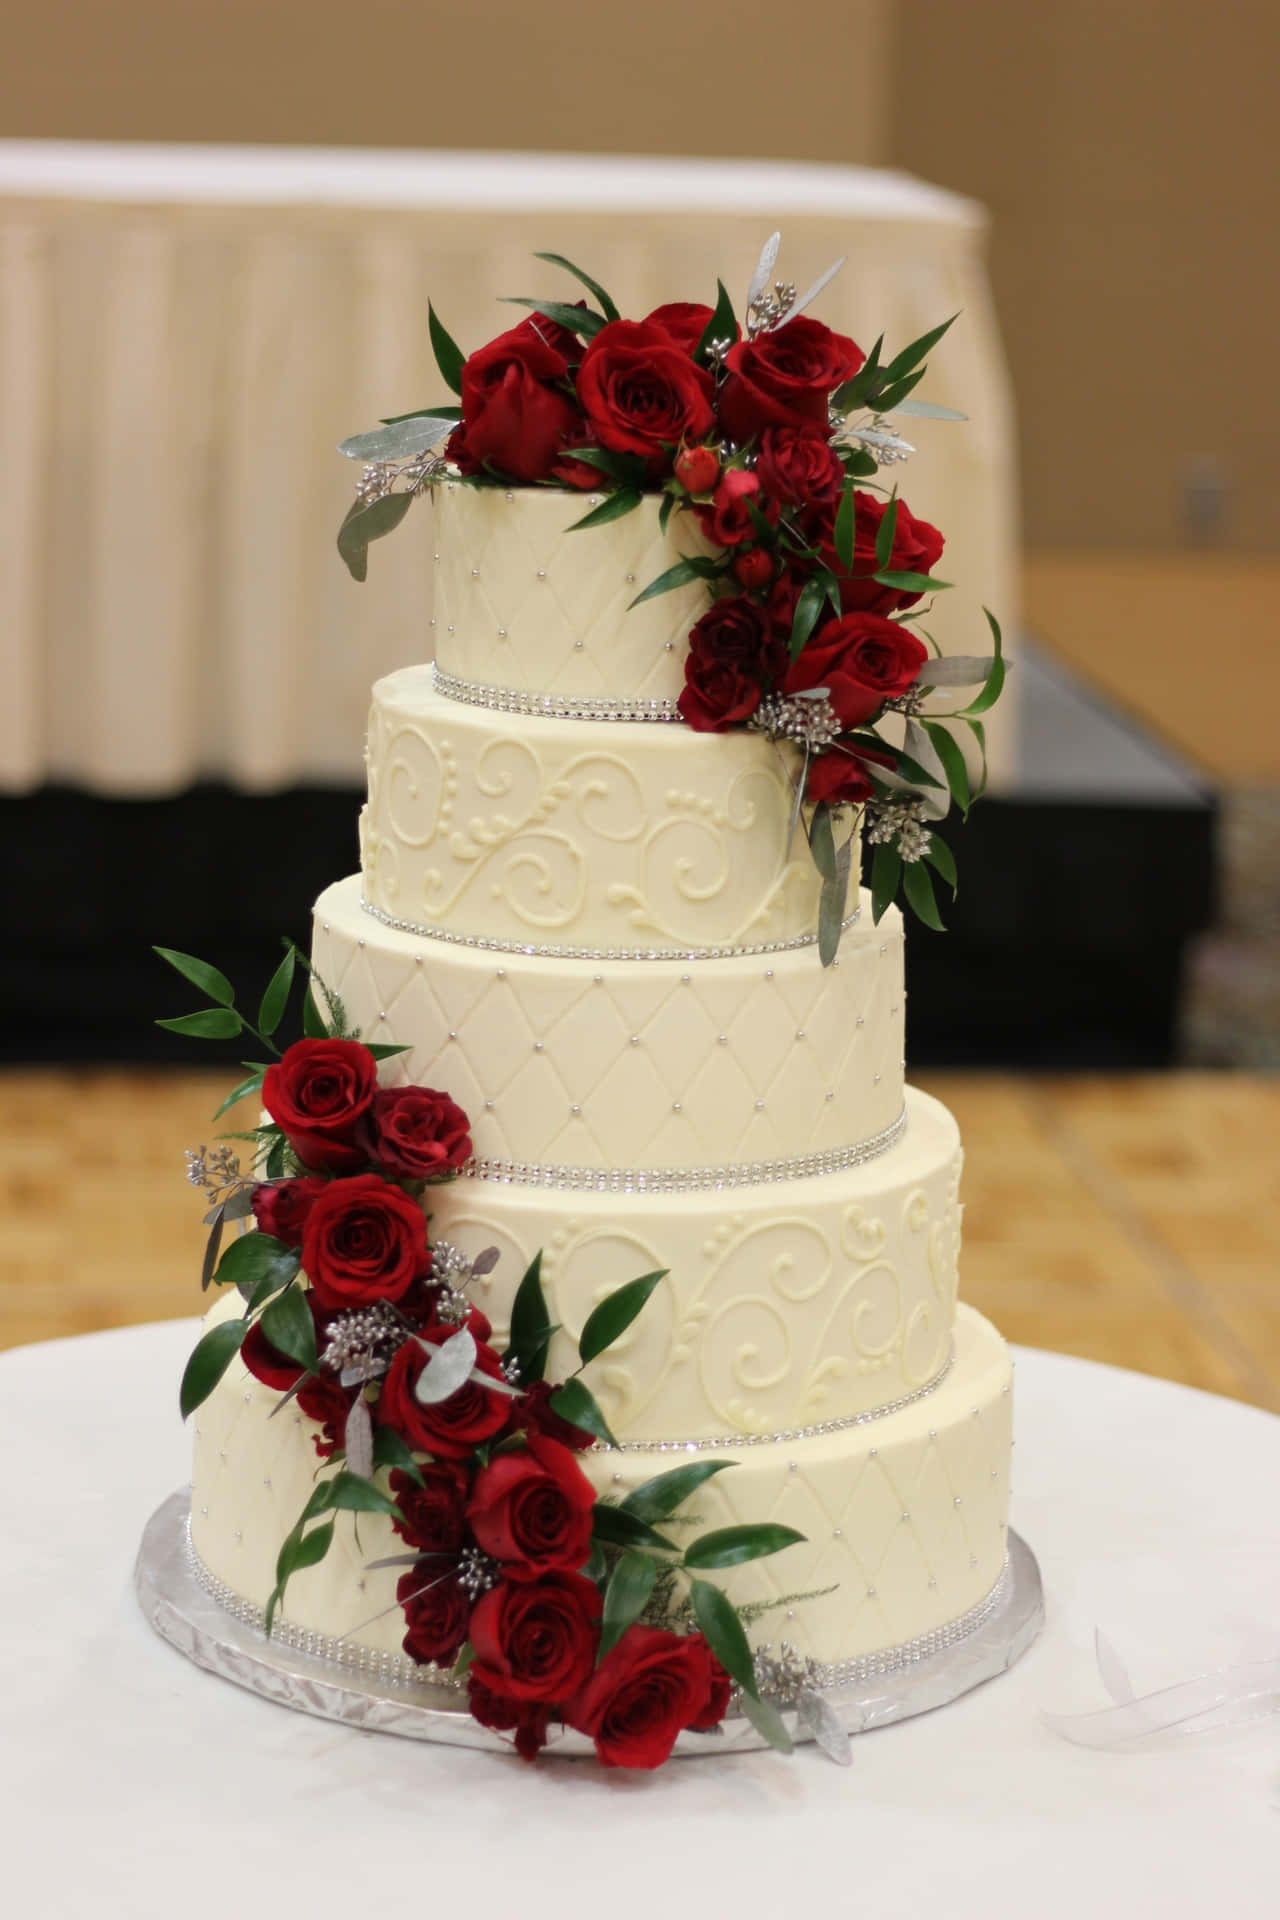 Deliciously perfect Wedding Cake